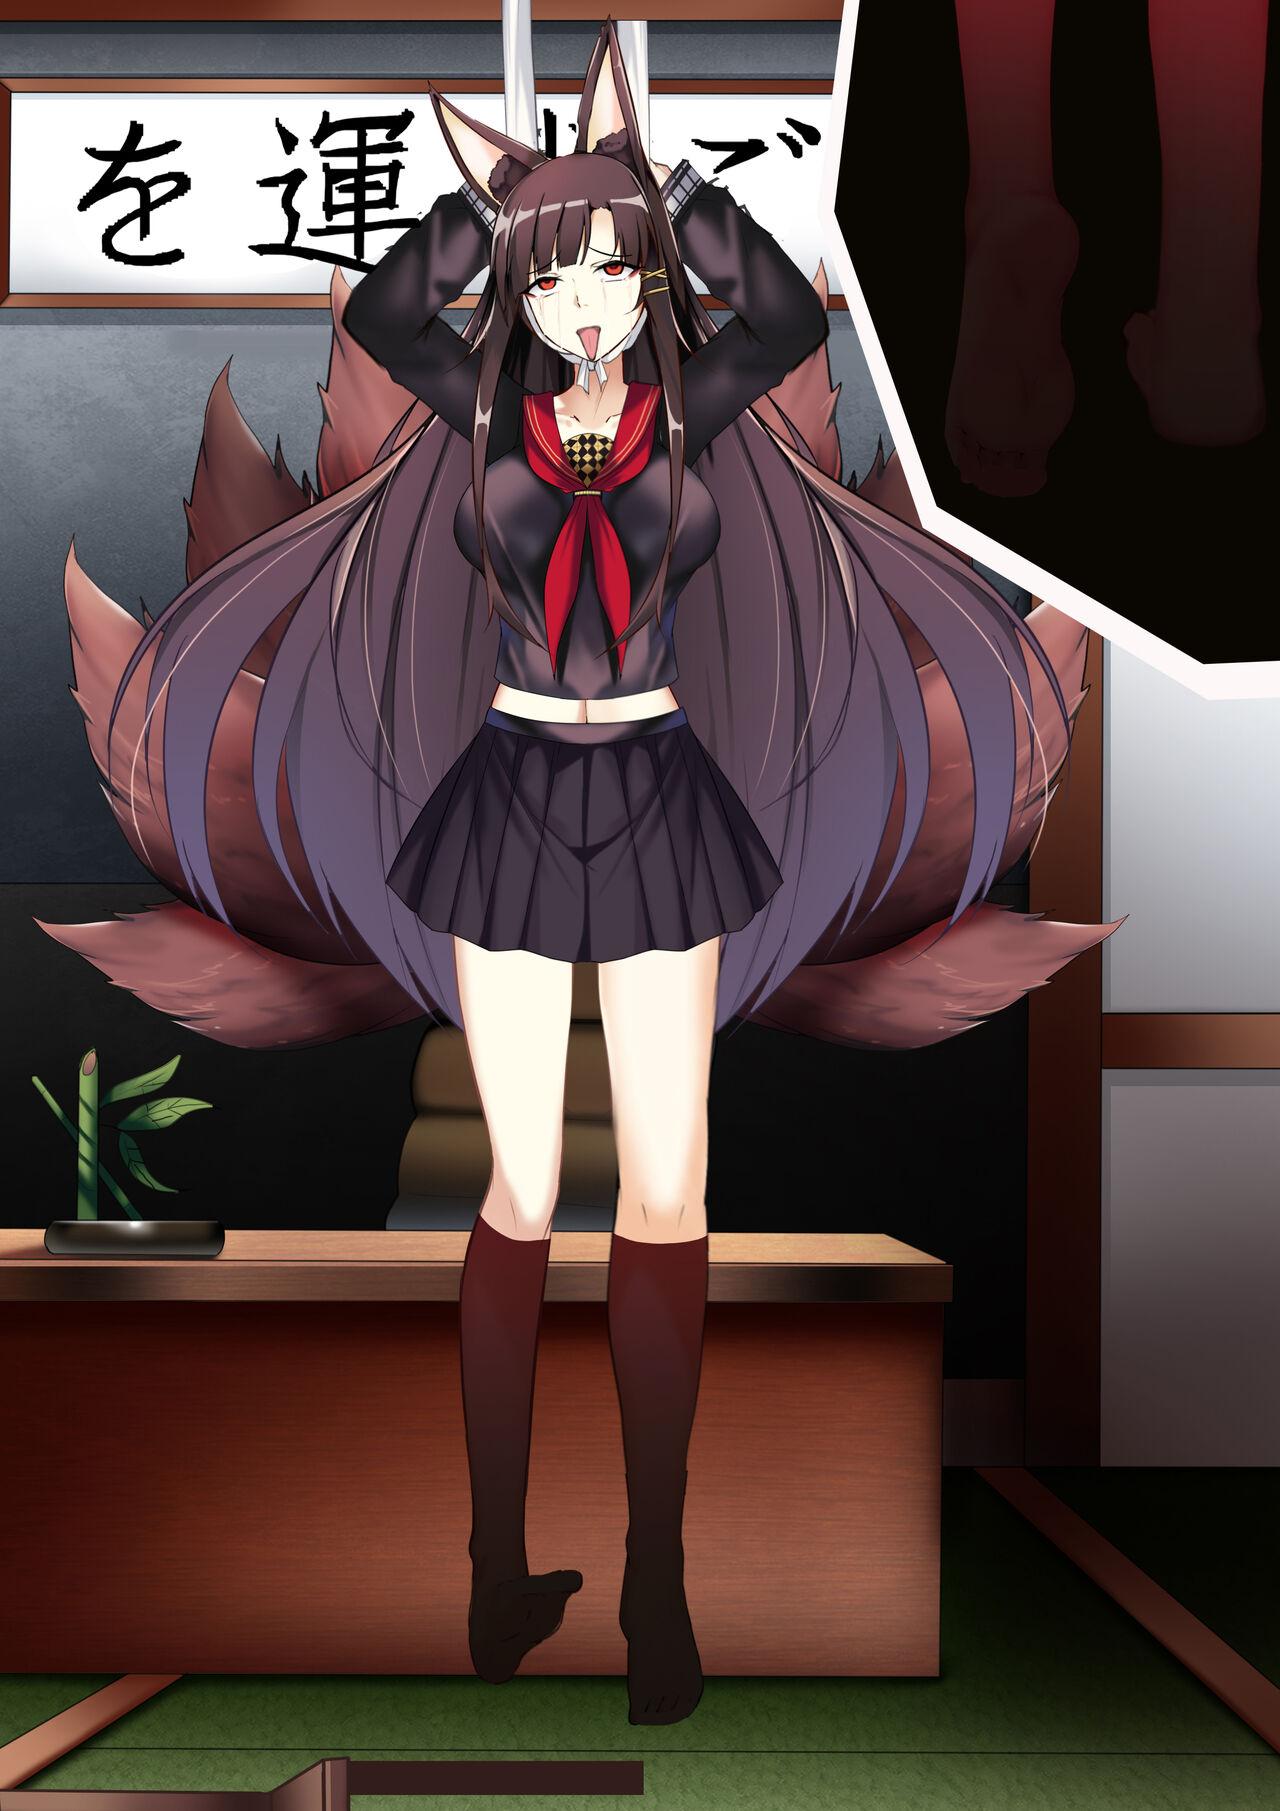 Akagi hanged herself in her office 114